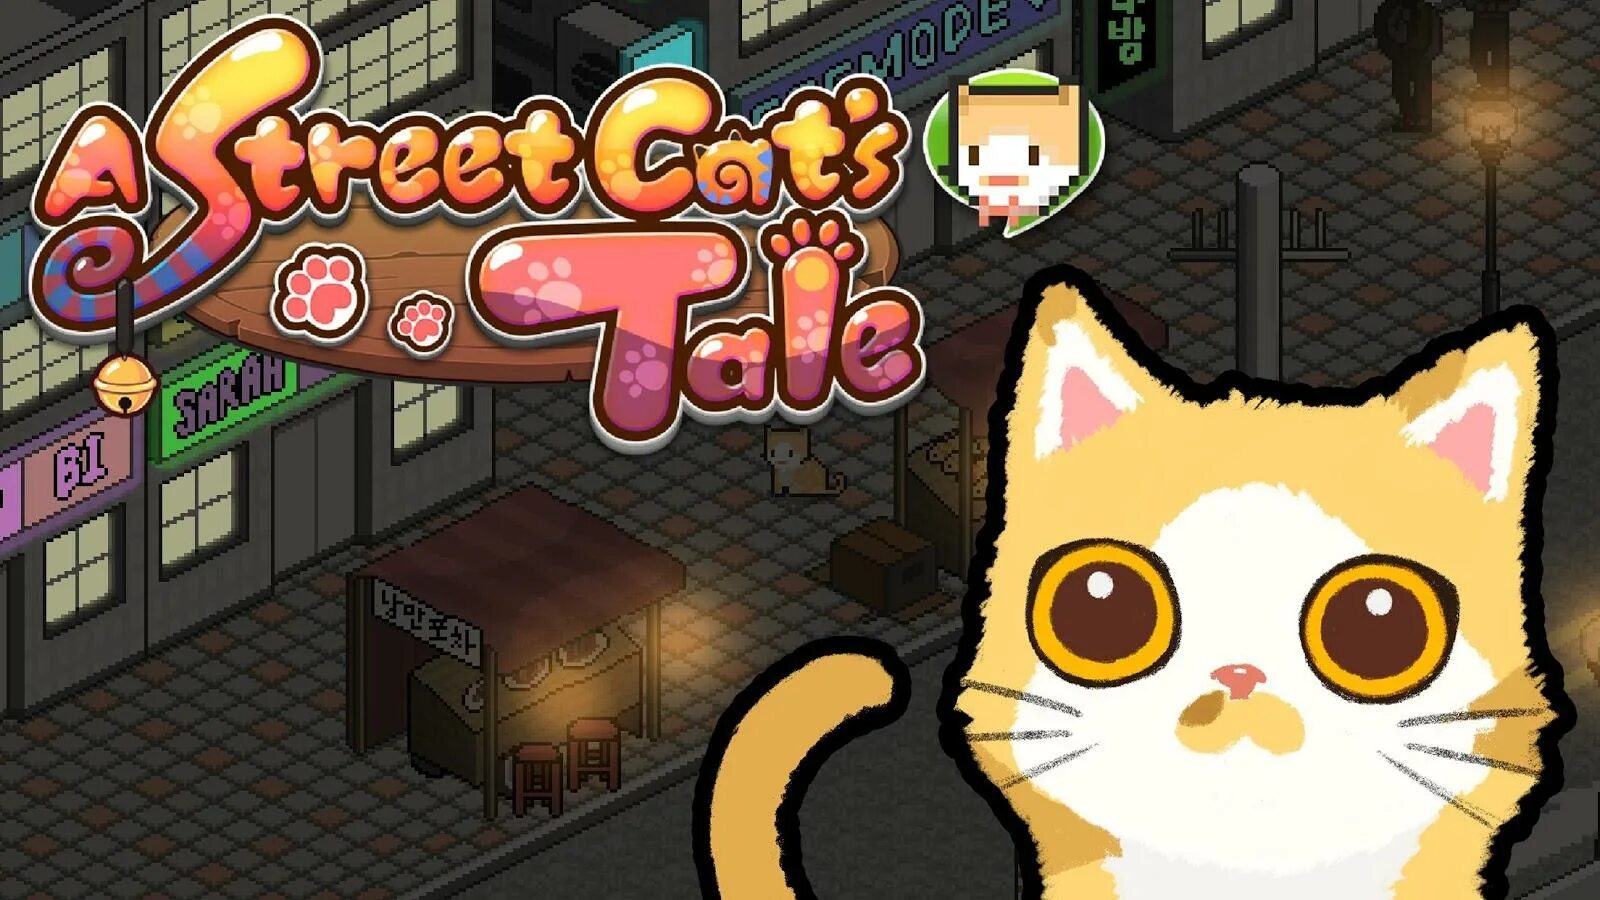 Игра a Street Cat`s Tale. A Street Cat's Tale последняя версия. A Street Cat's Tale карта. Пиксельные котики игра. Hello street cat издевательство